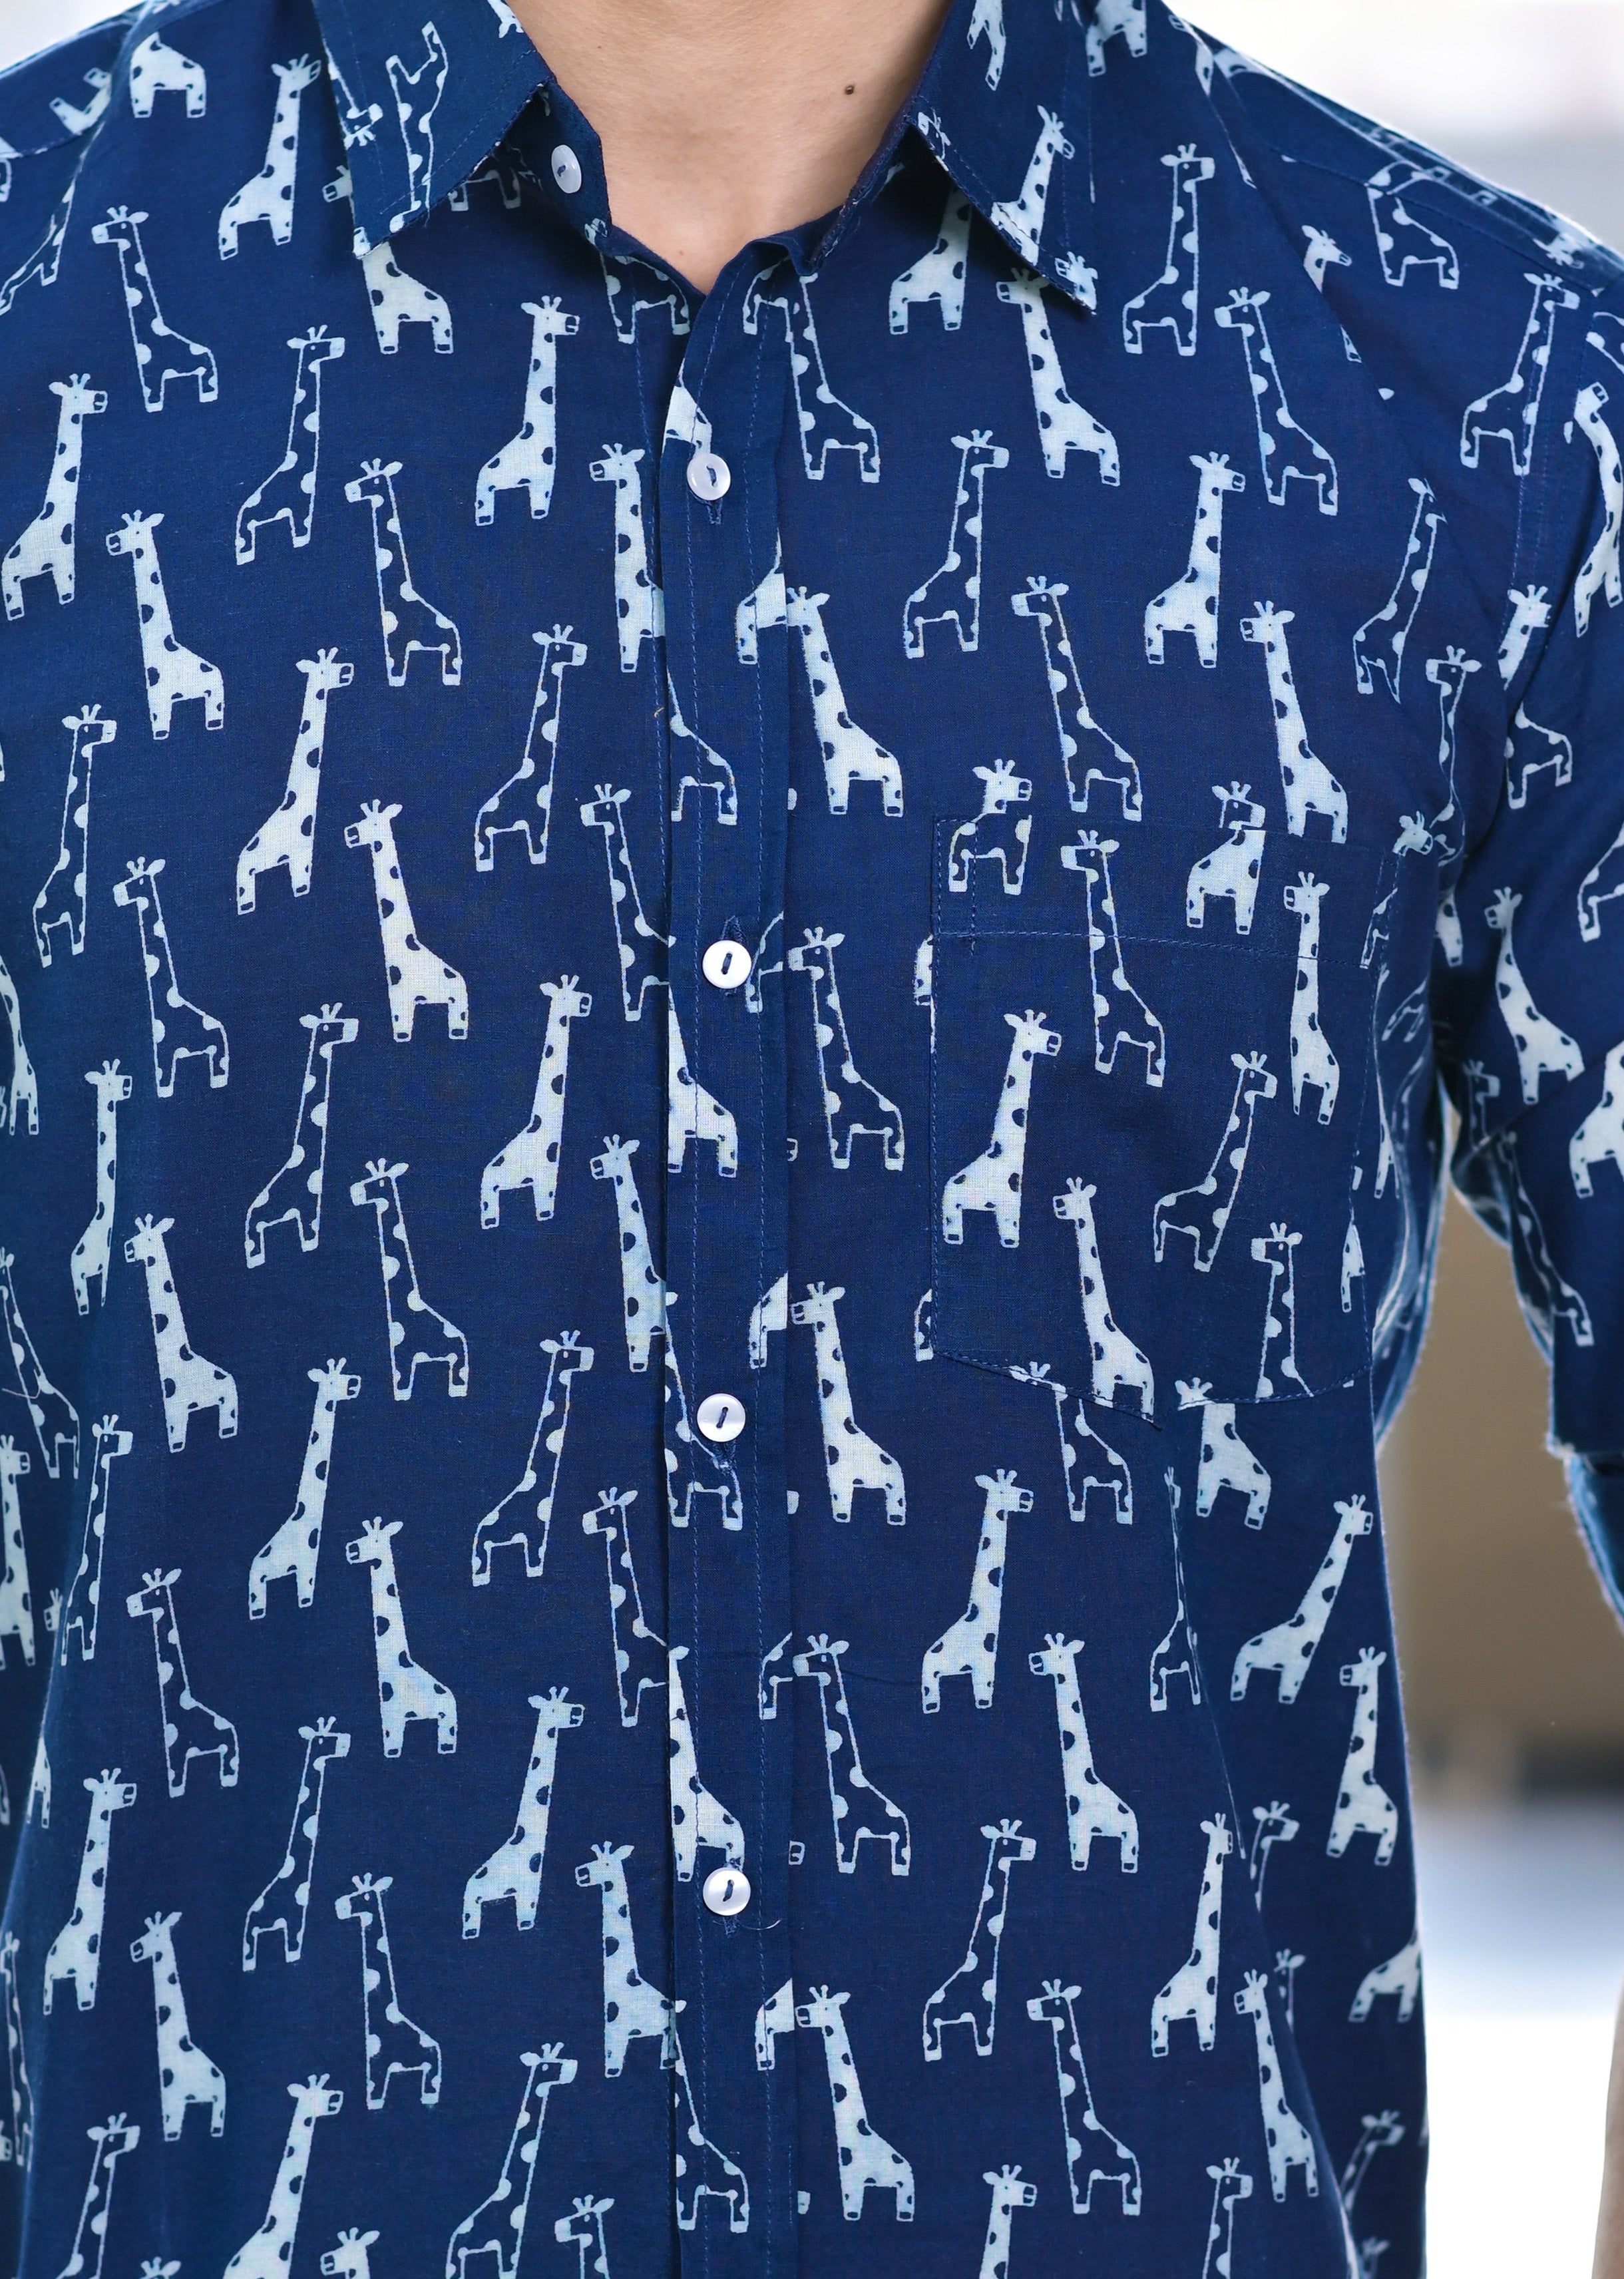 Men's Bagru Giraffe Print Indigo Cotton Shirt - Hatheli